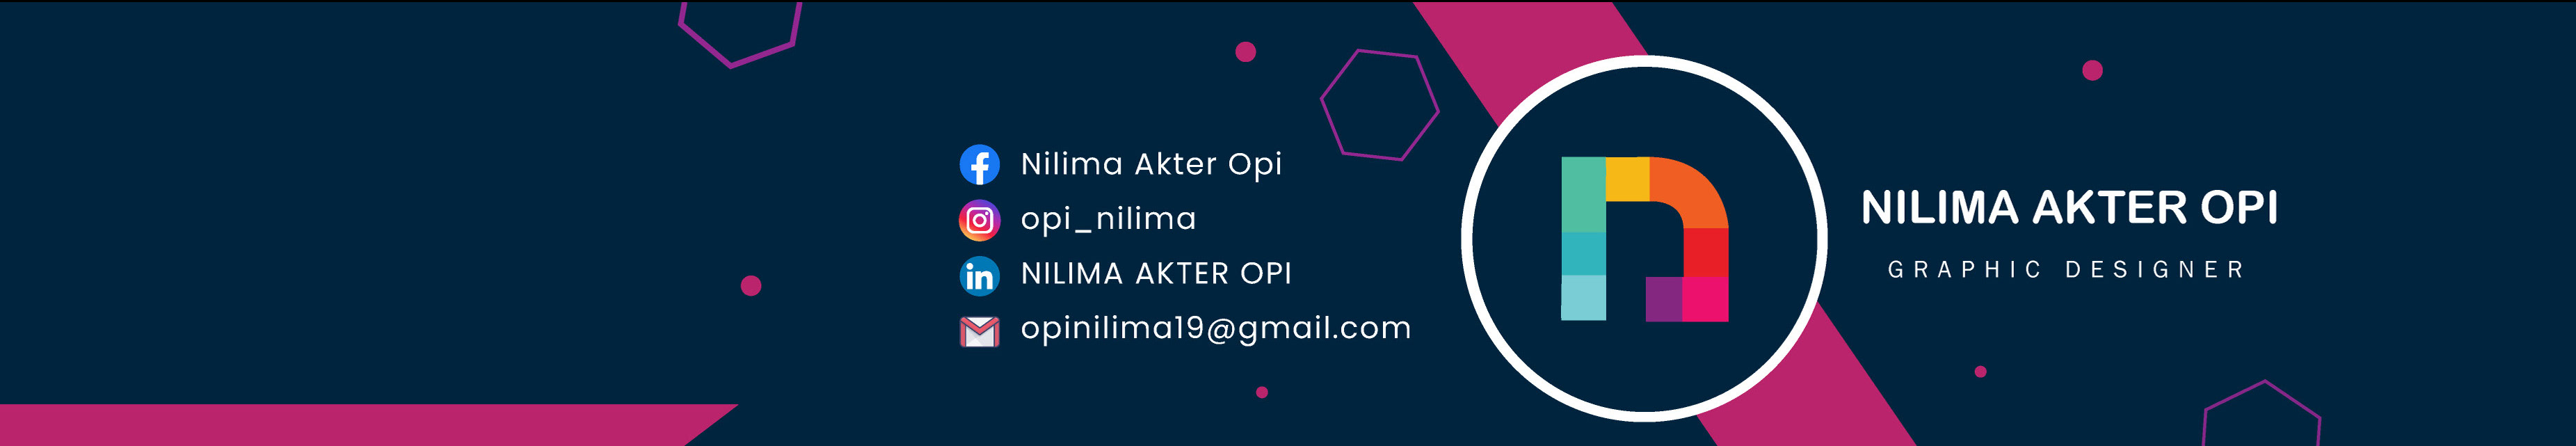 Nilima Akter Opi's profile banner